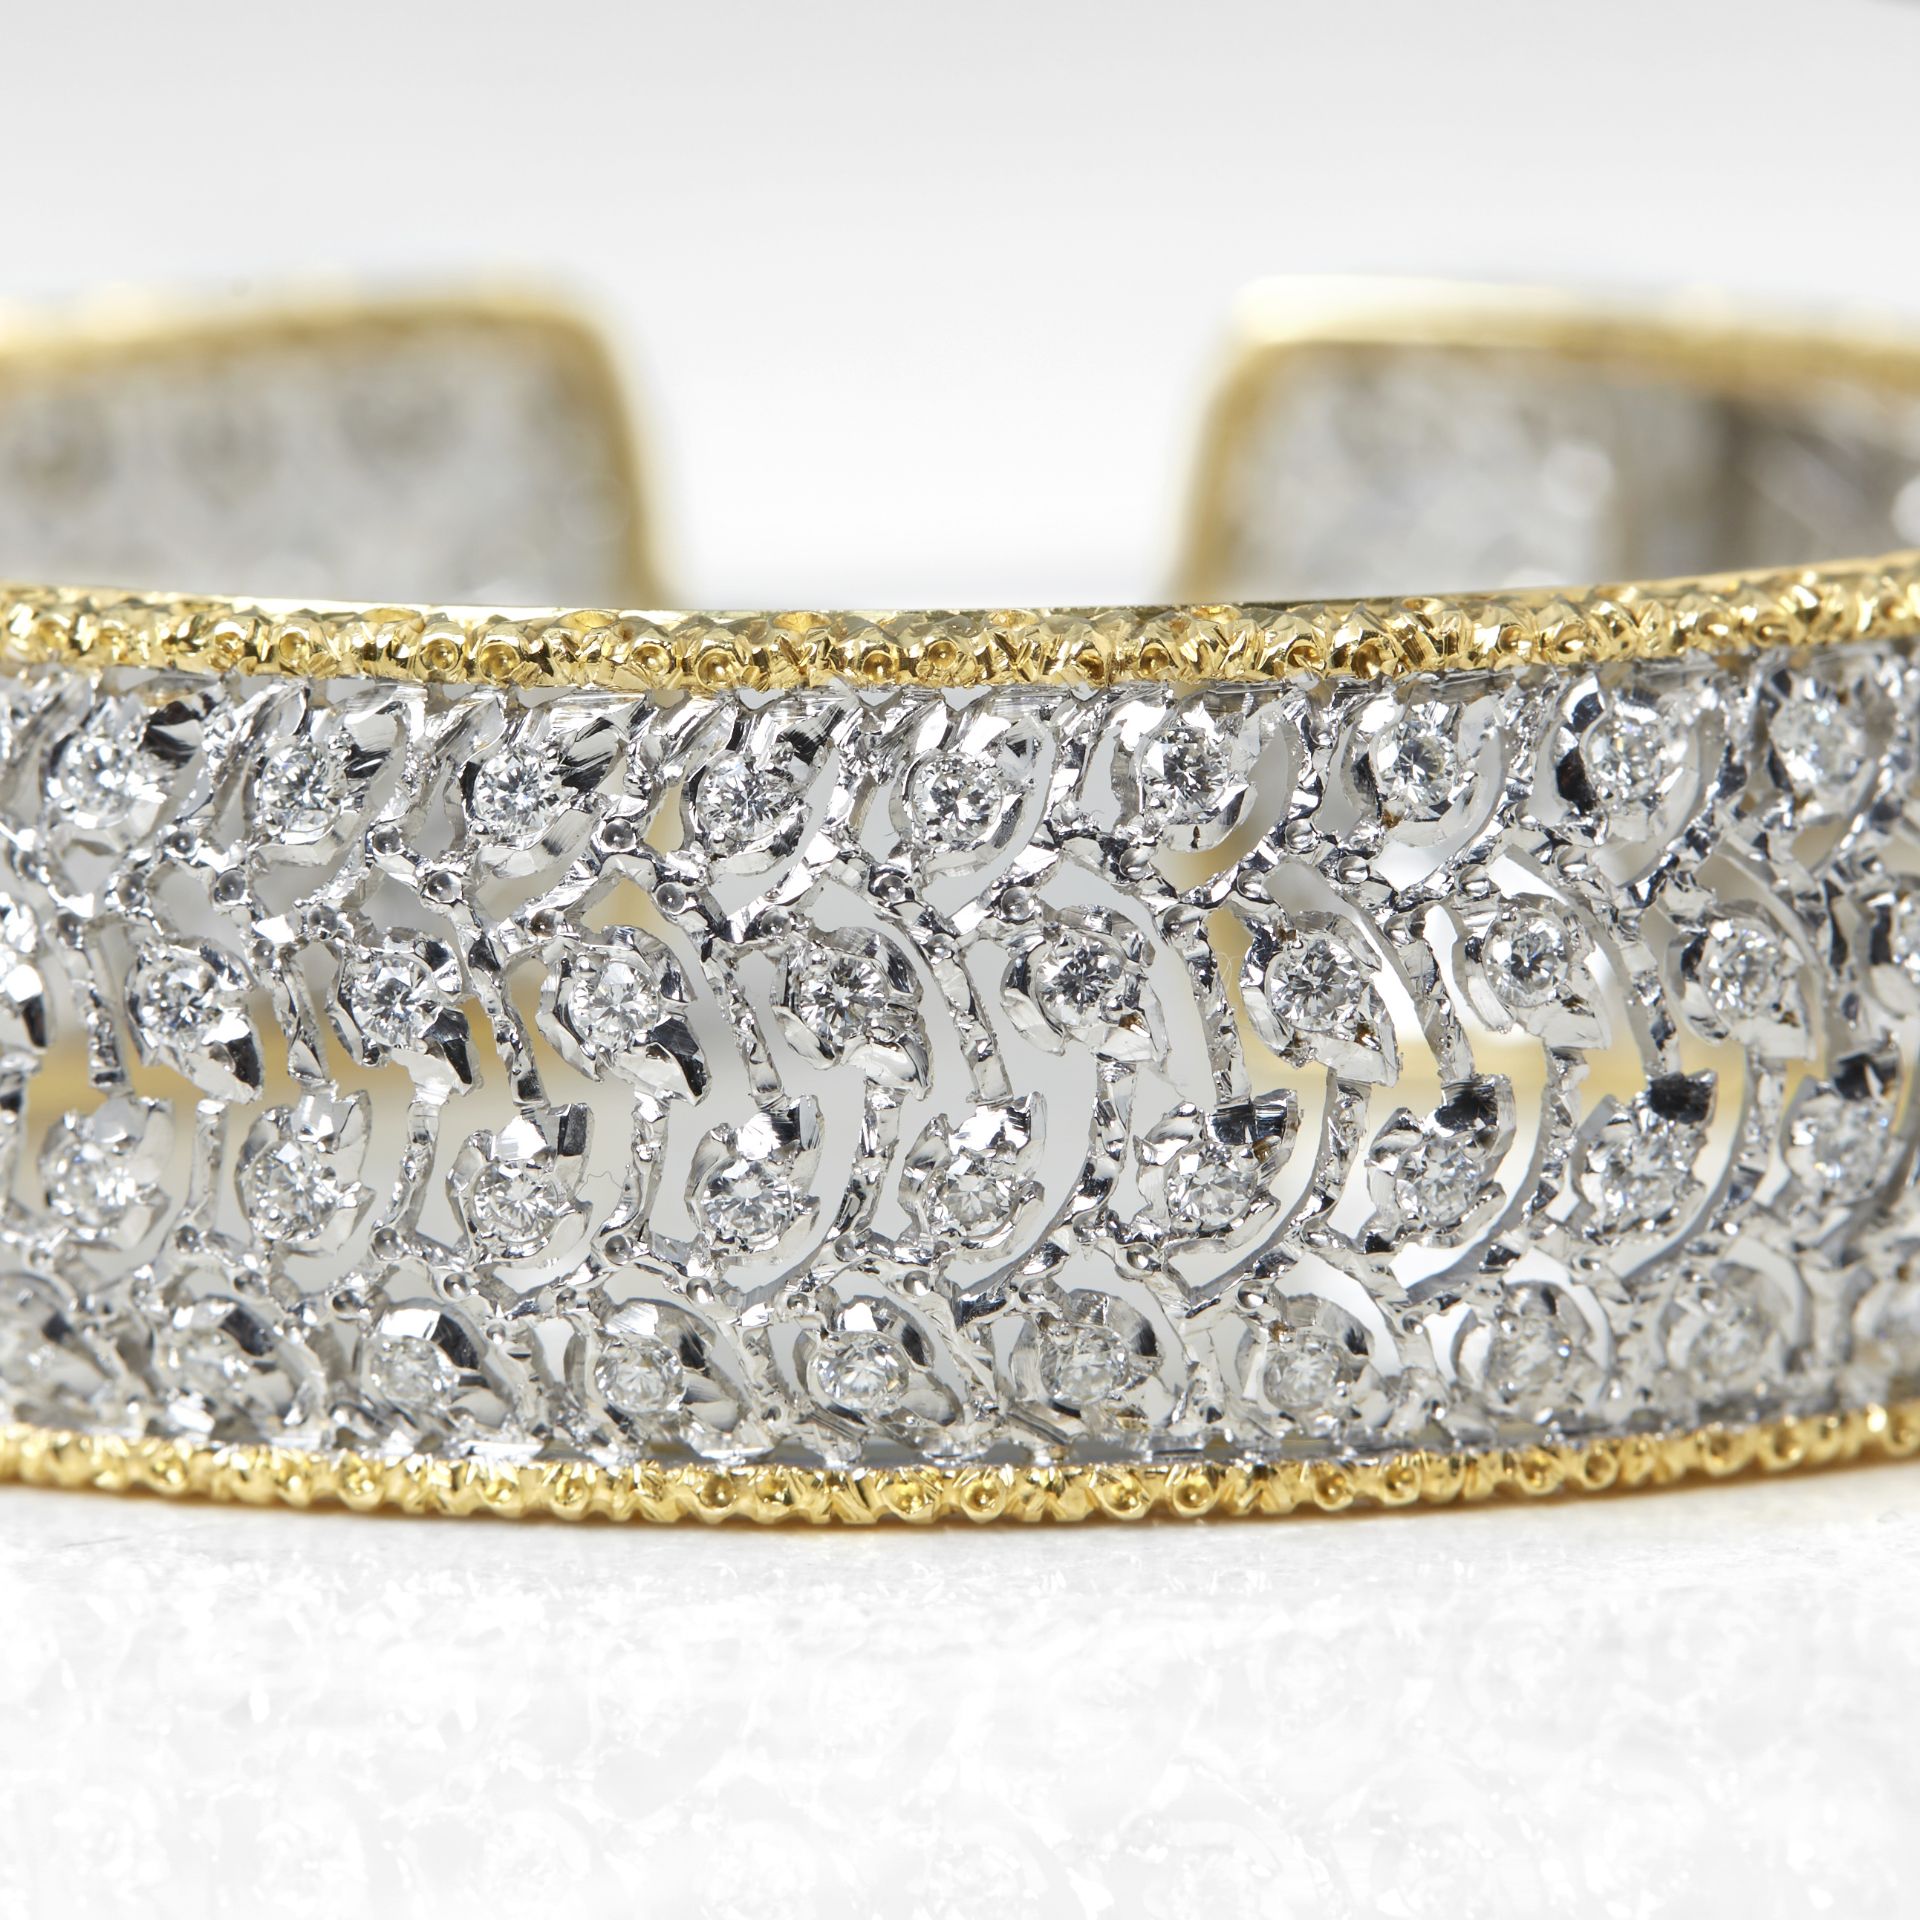 Buccellati 18k White & Yellow Gold 5.00ct Diamond Cuff Bracelet - Image 3 of 8